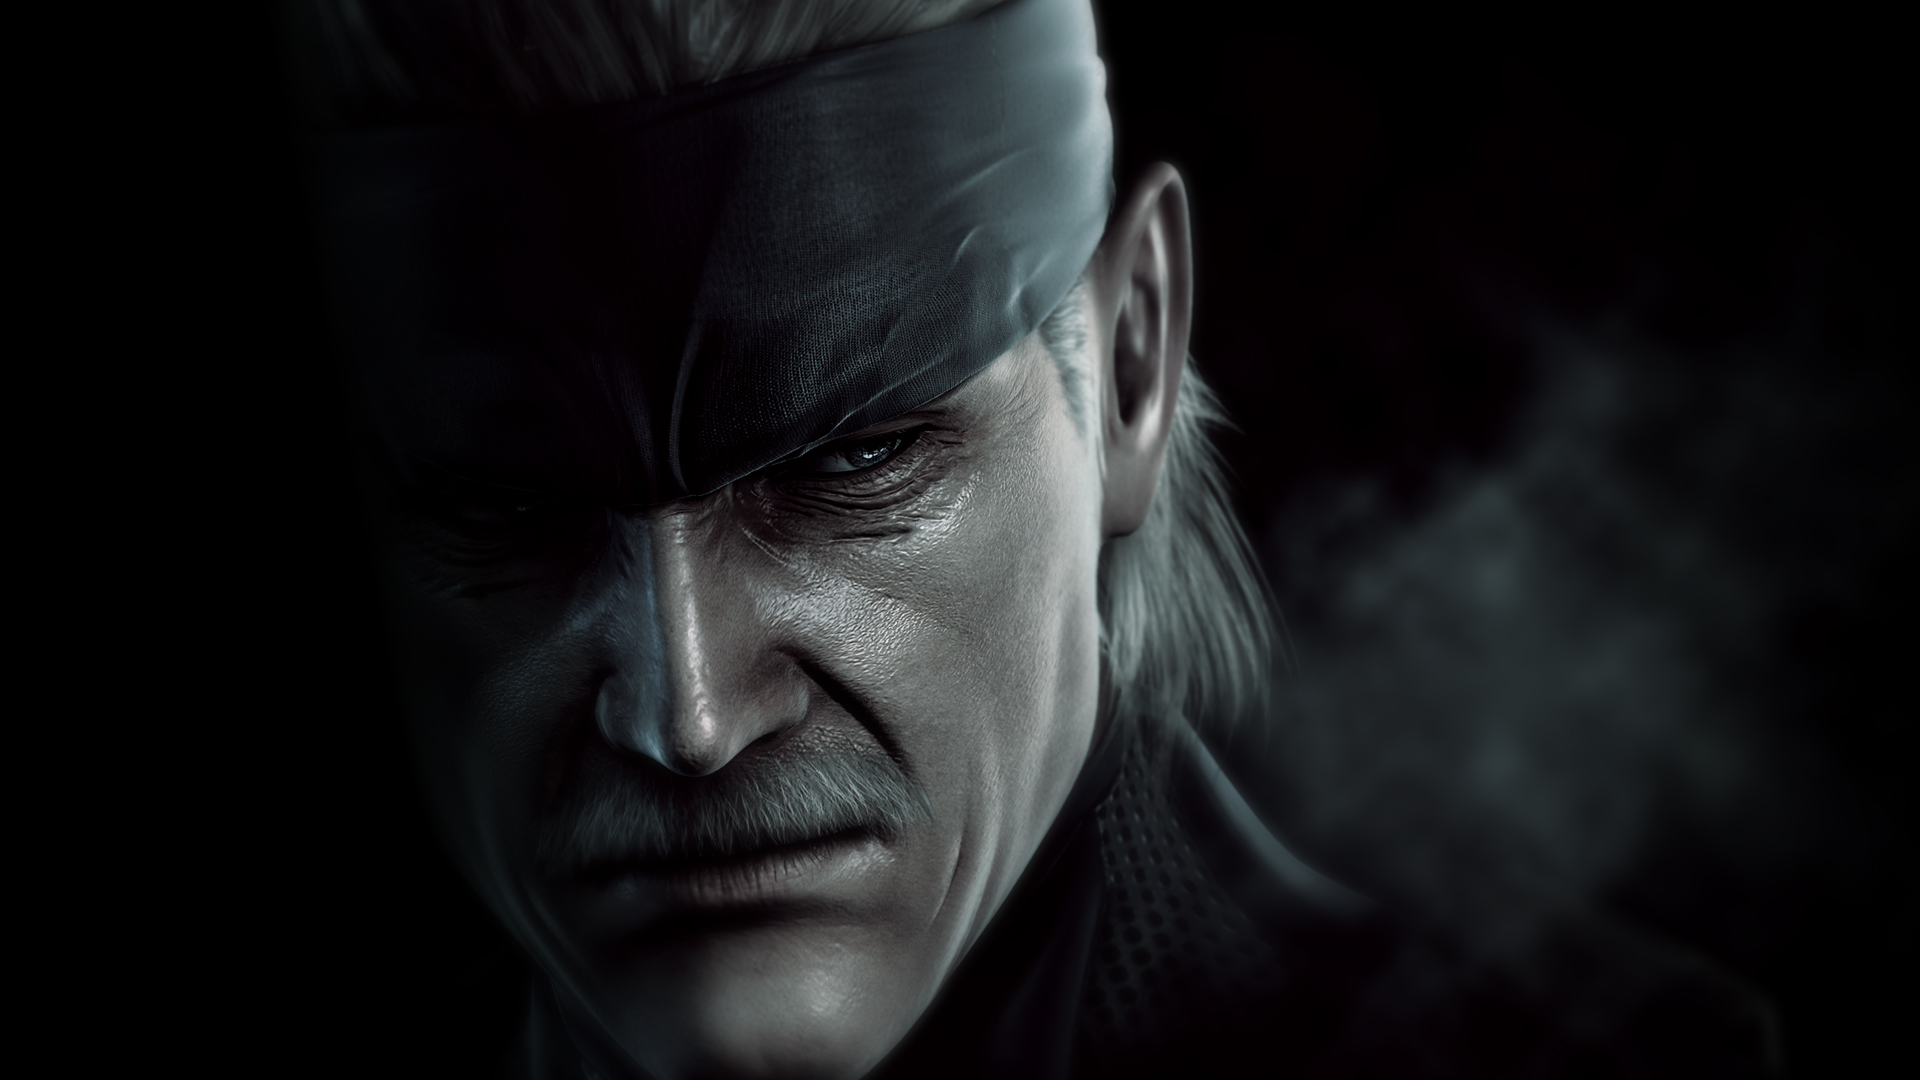 226 Metal Gear HD Wallpapers | Backgrounds - Wallpaper Abyss